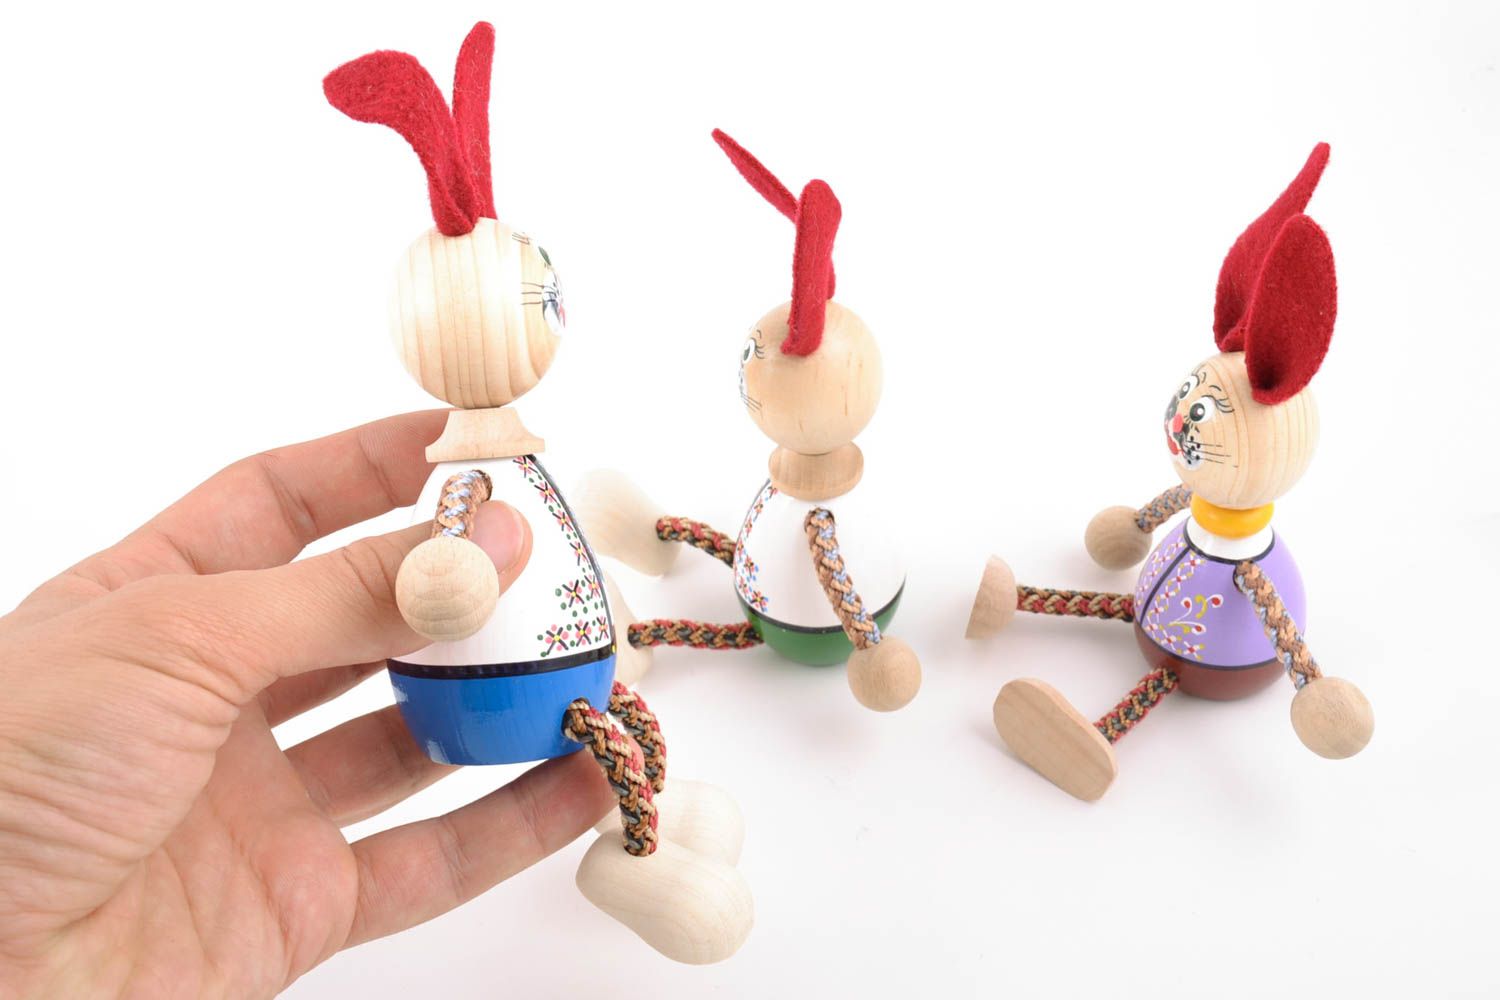 Handmade Öko Holz Spielzeug Set 3 Stück Hasen in Trachten Buchenholz foto 2